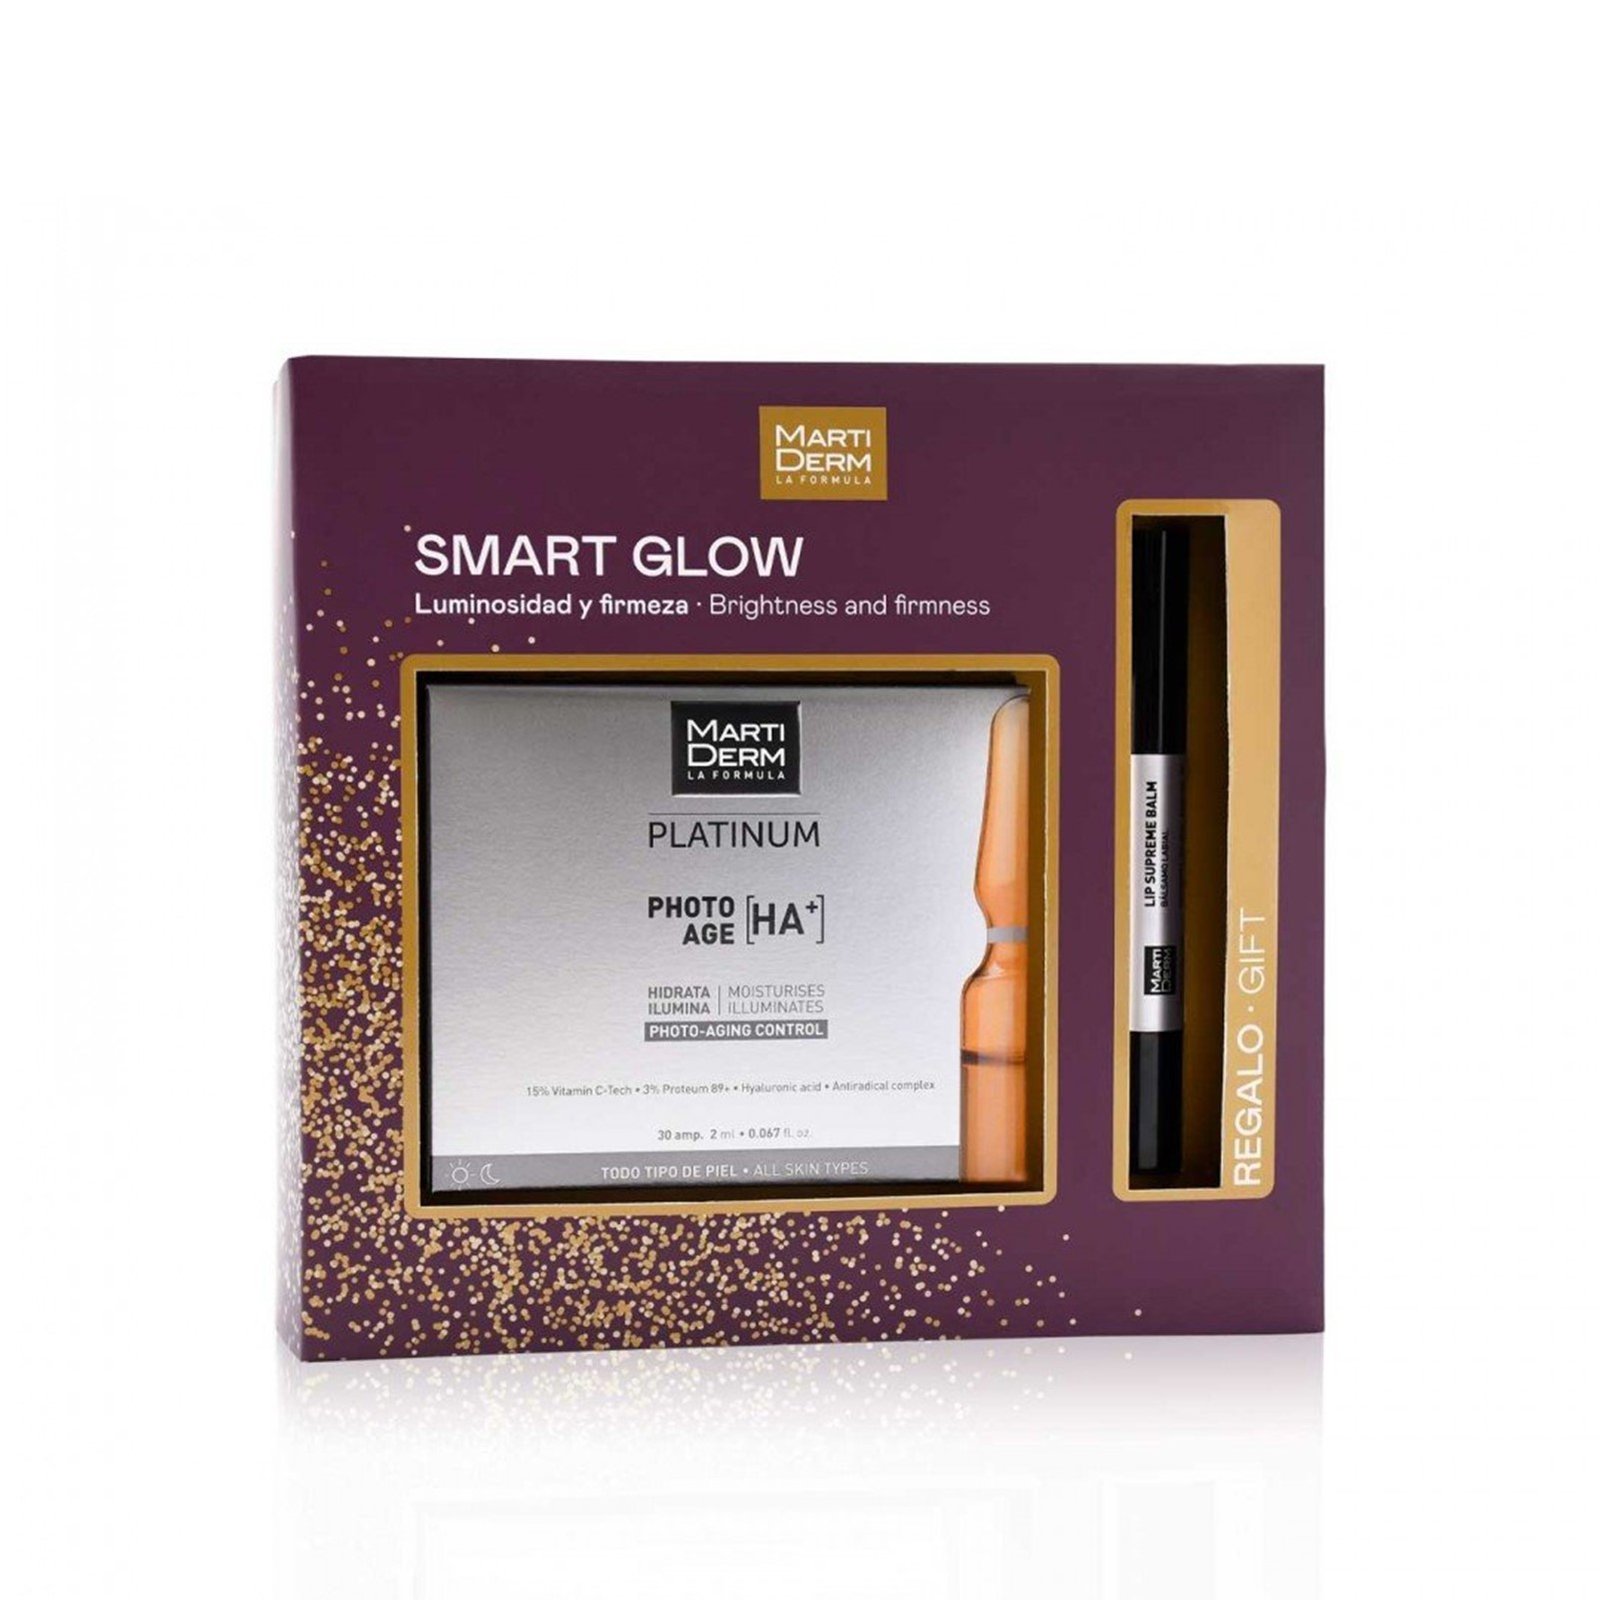 Martiderm Smart Glow Pack